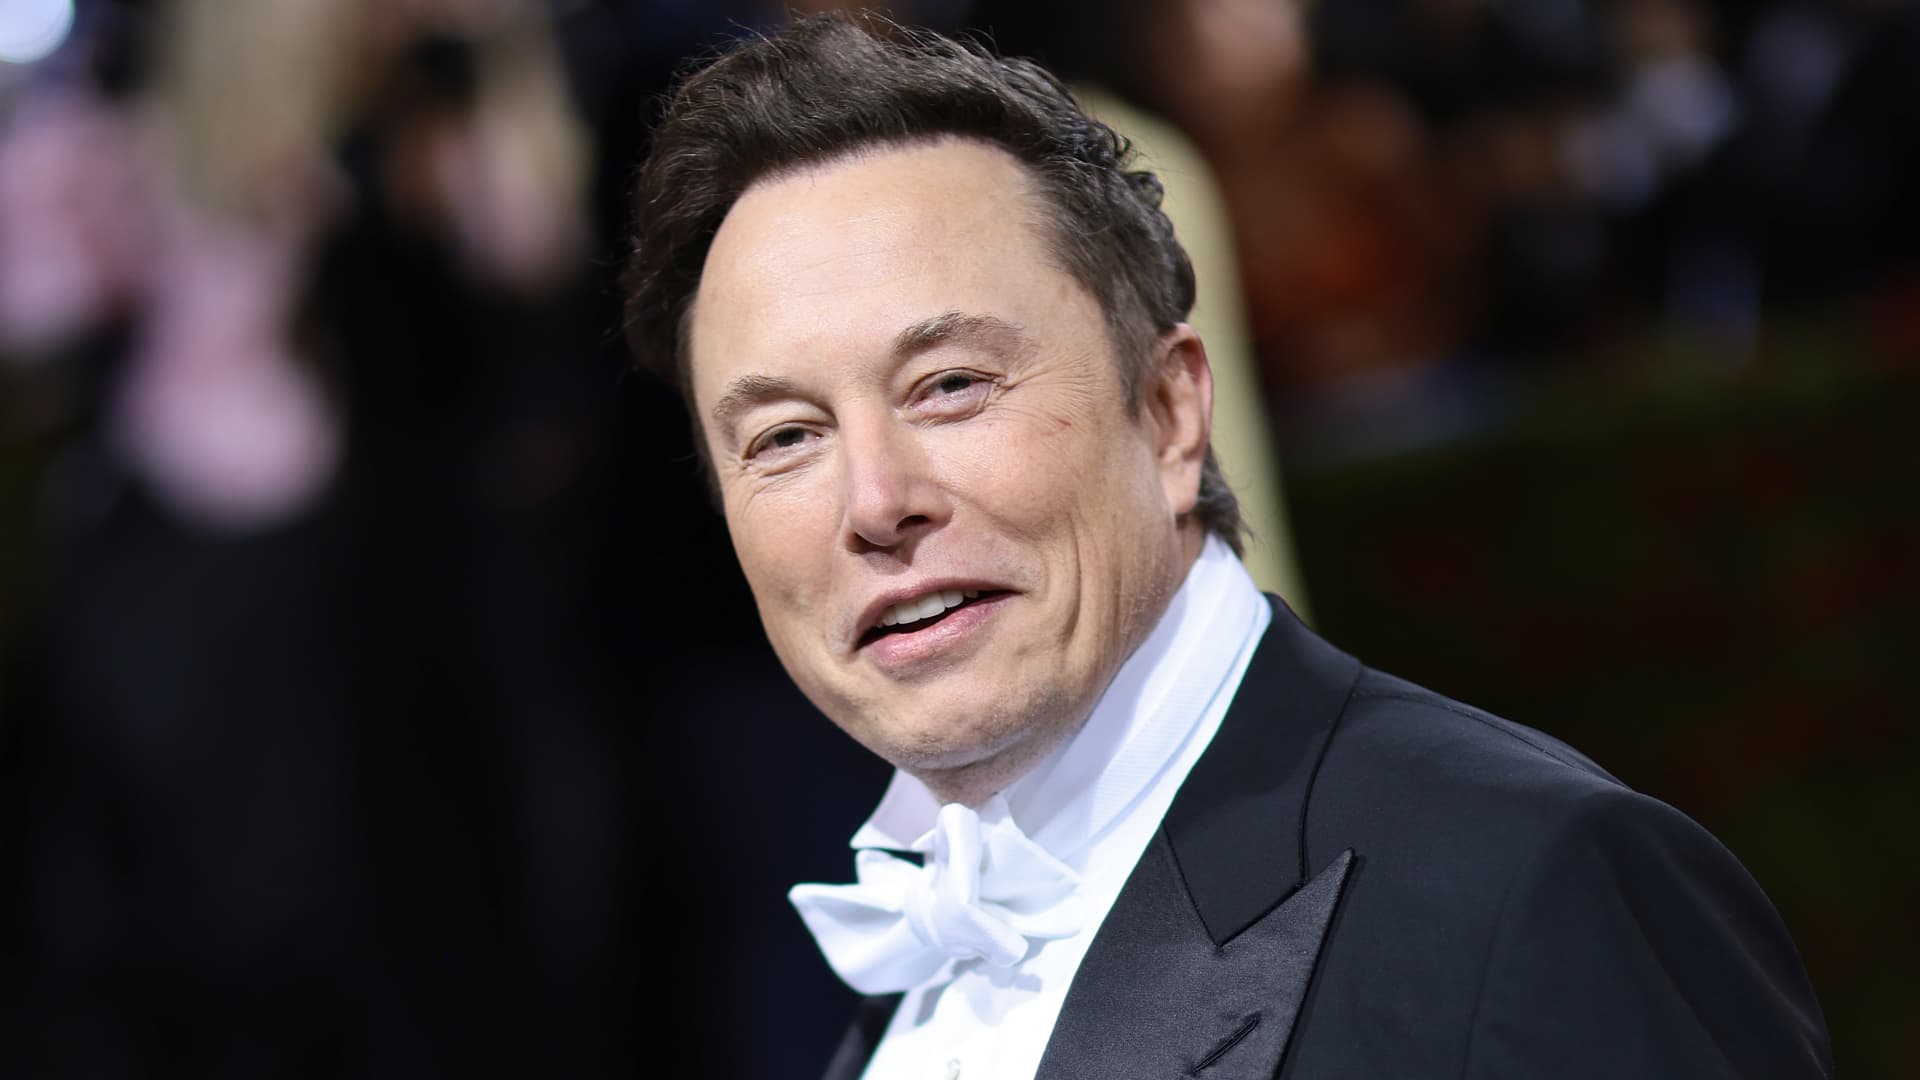 Elon Musk sells 7.92 million Tesla shares worth $6.88 billion - CNBC